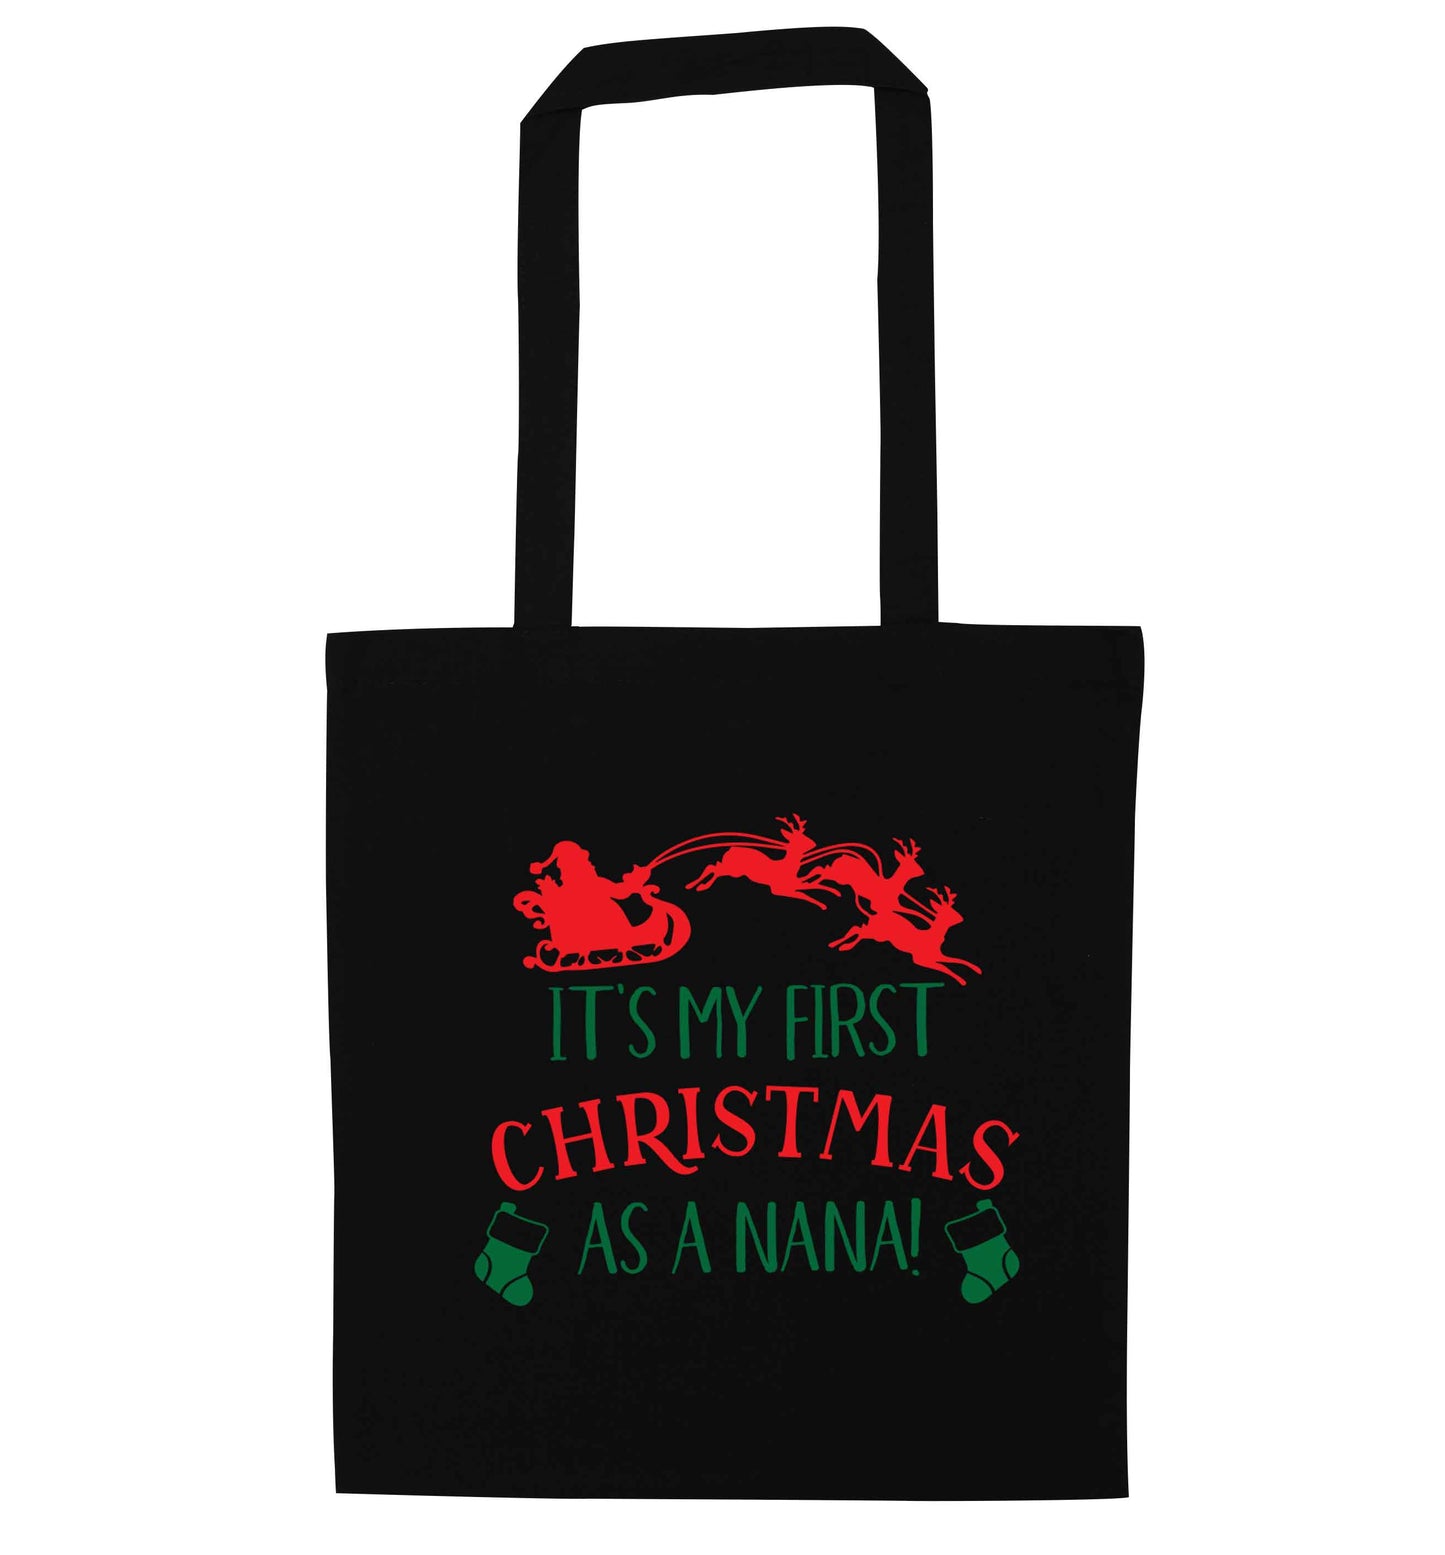 It's my first Christmas as a nana black tote bag